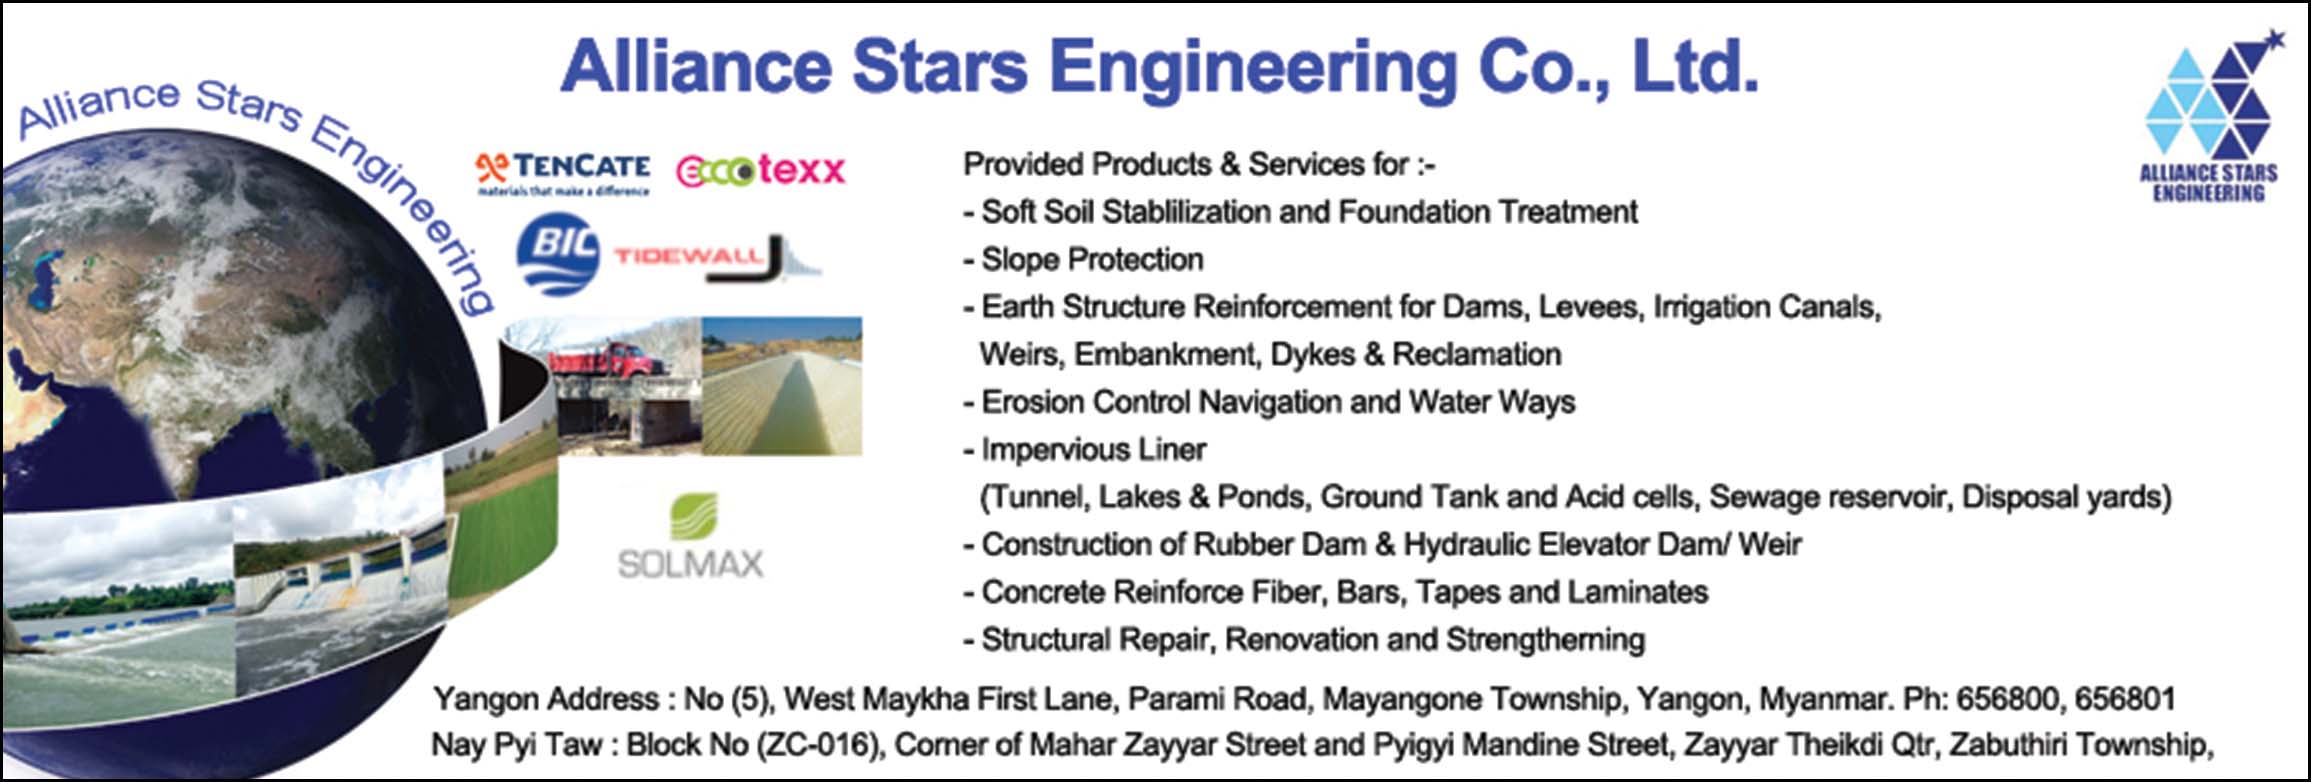 Alliance Stars Engineering Co., Ltd.